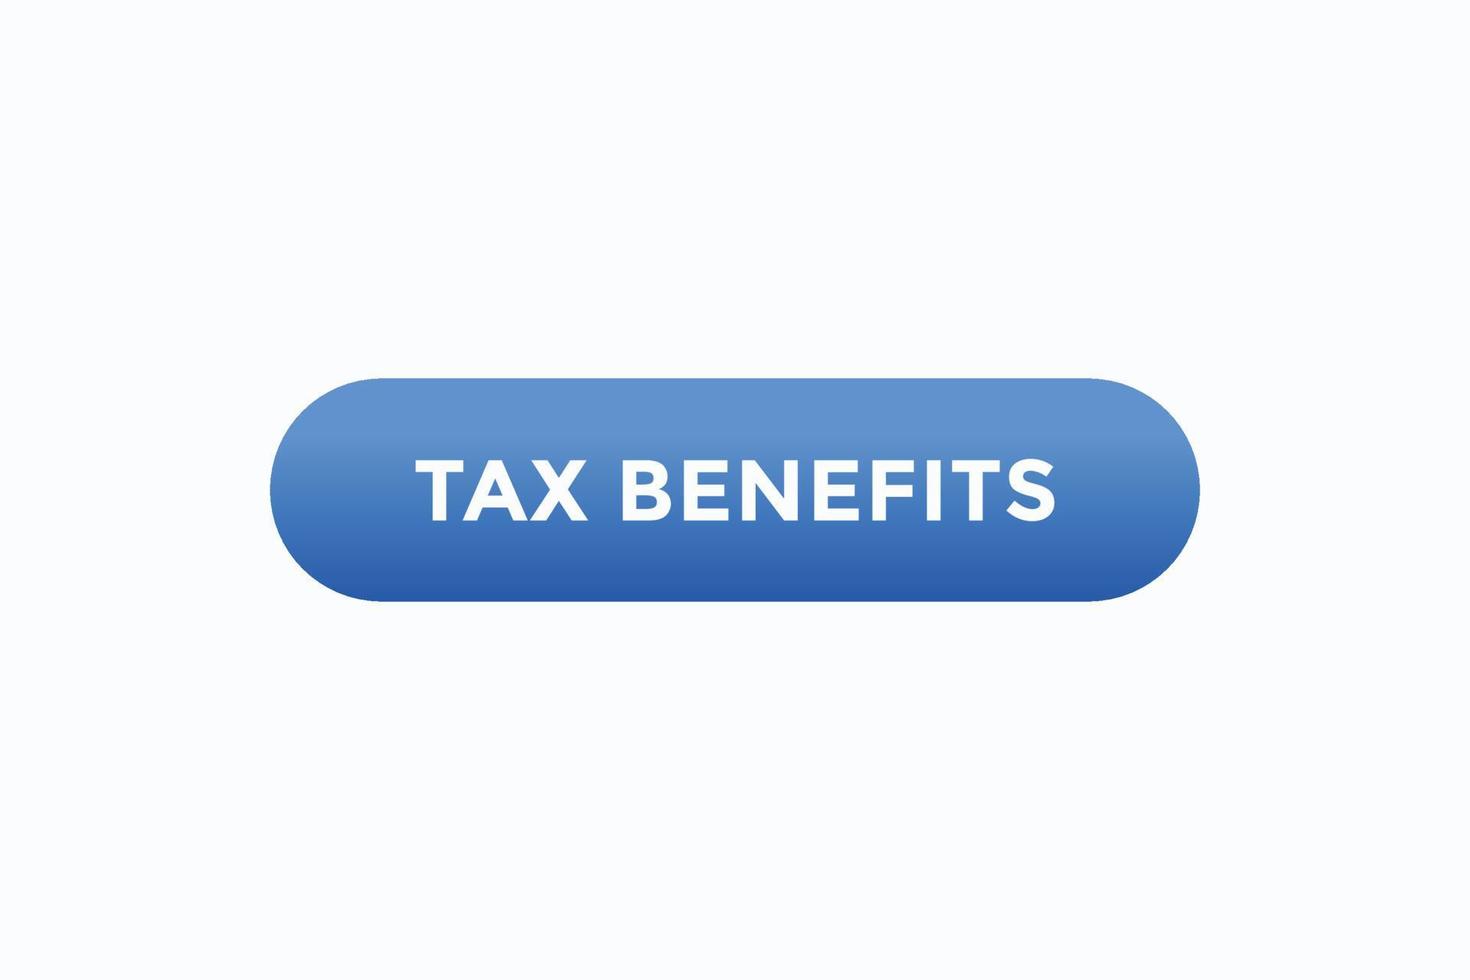 tax benefits button vectors.sign label speech bubble tax benefits vector